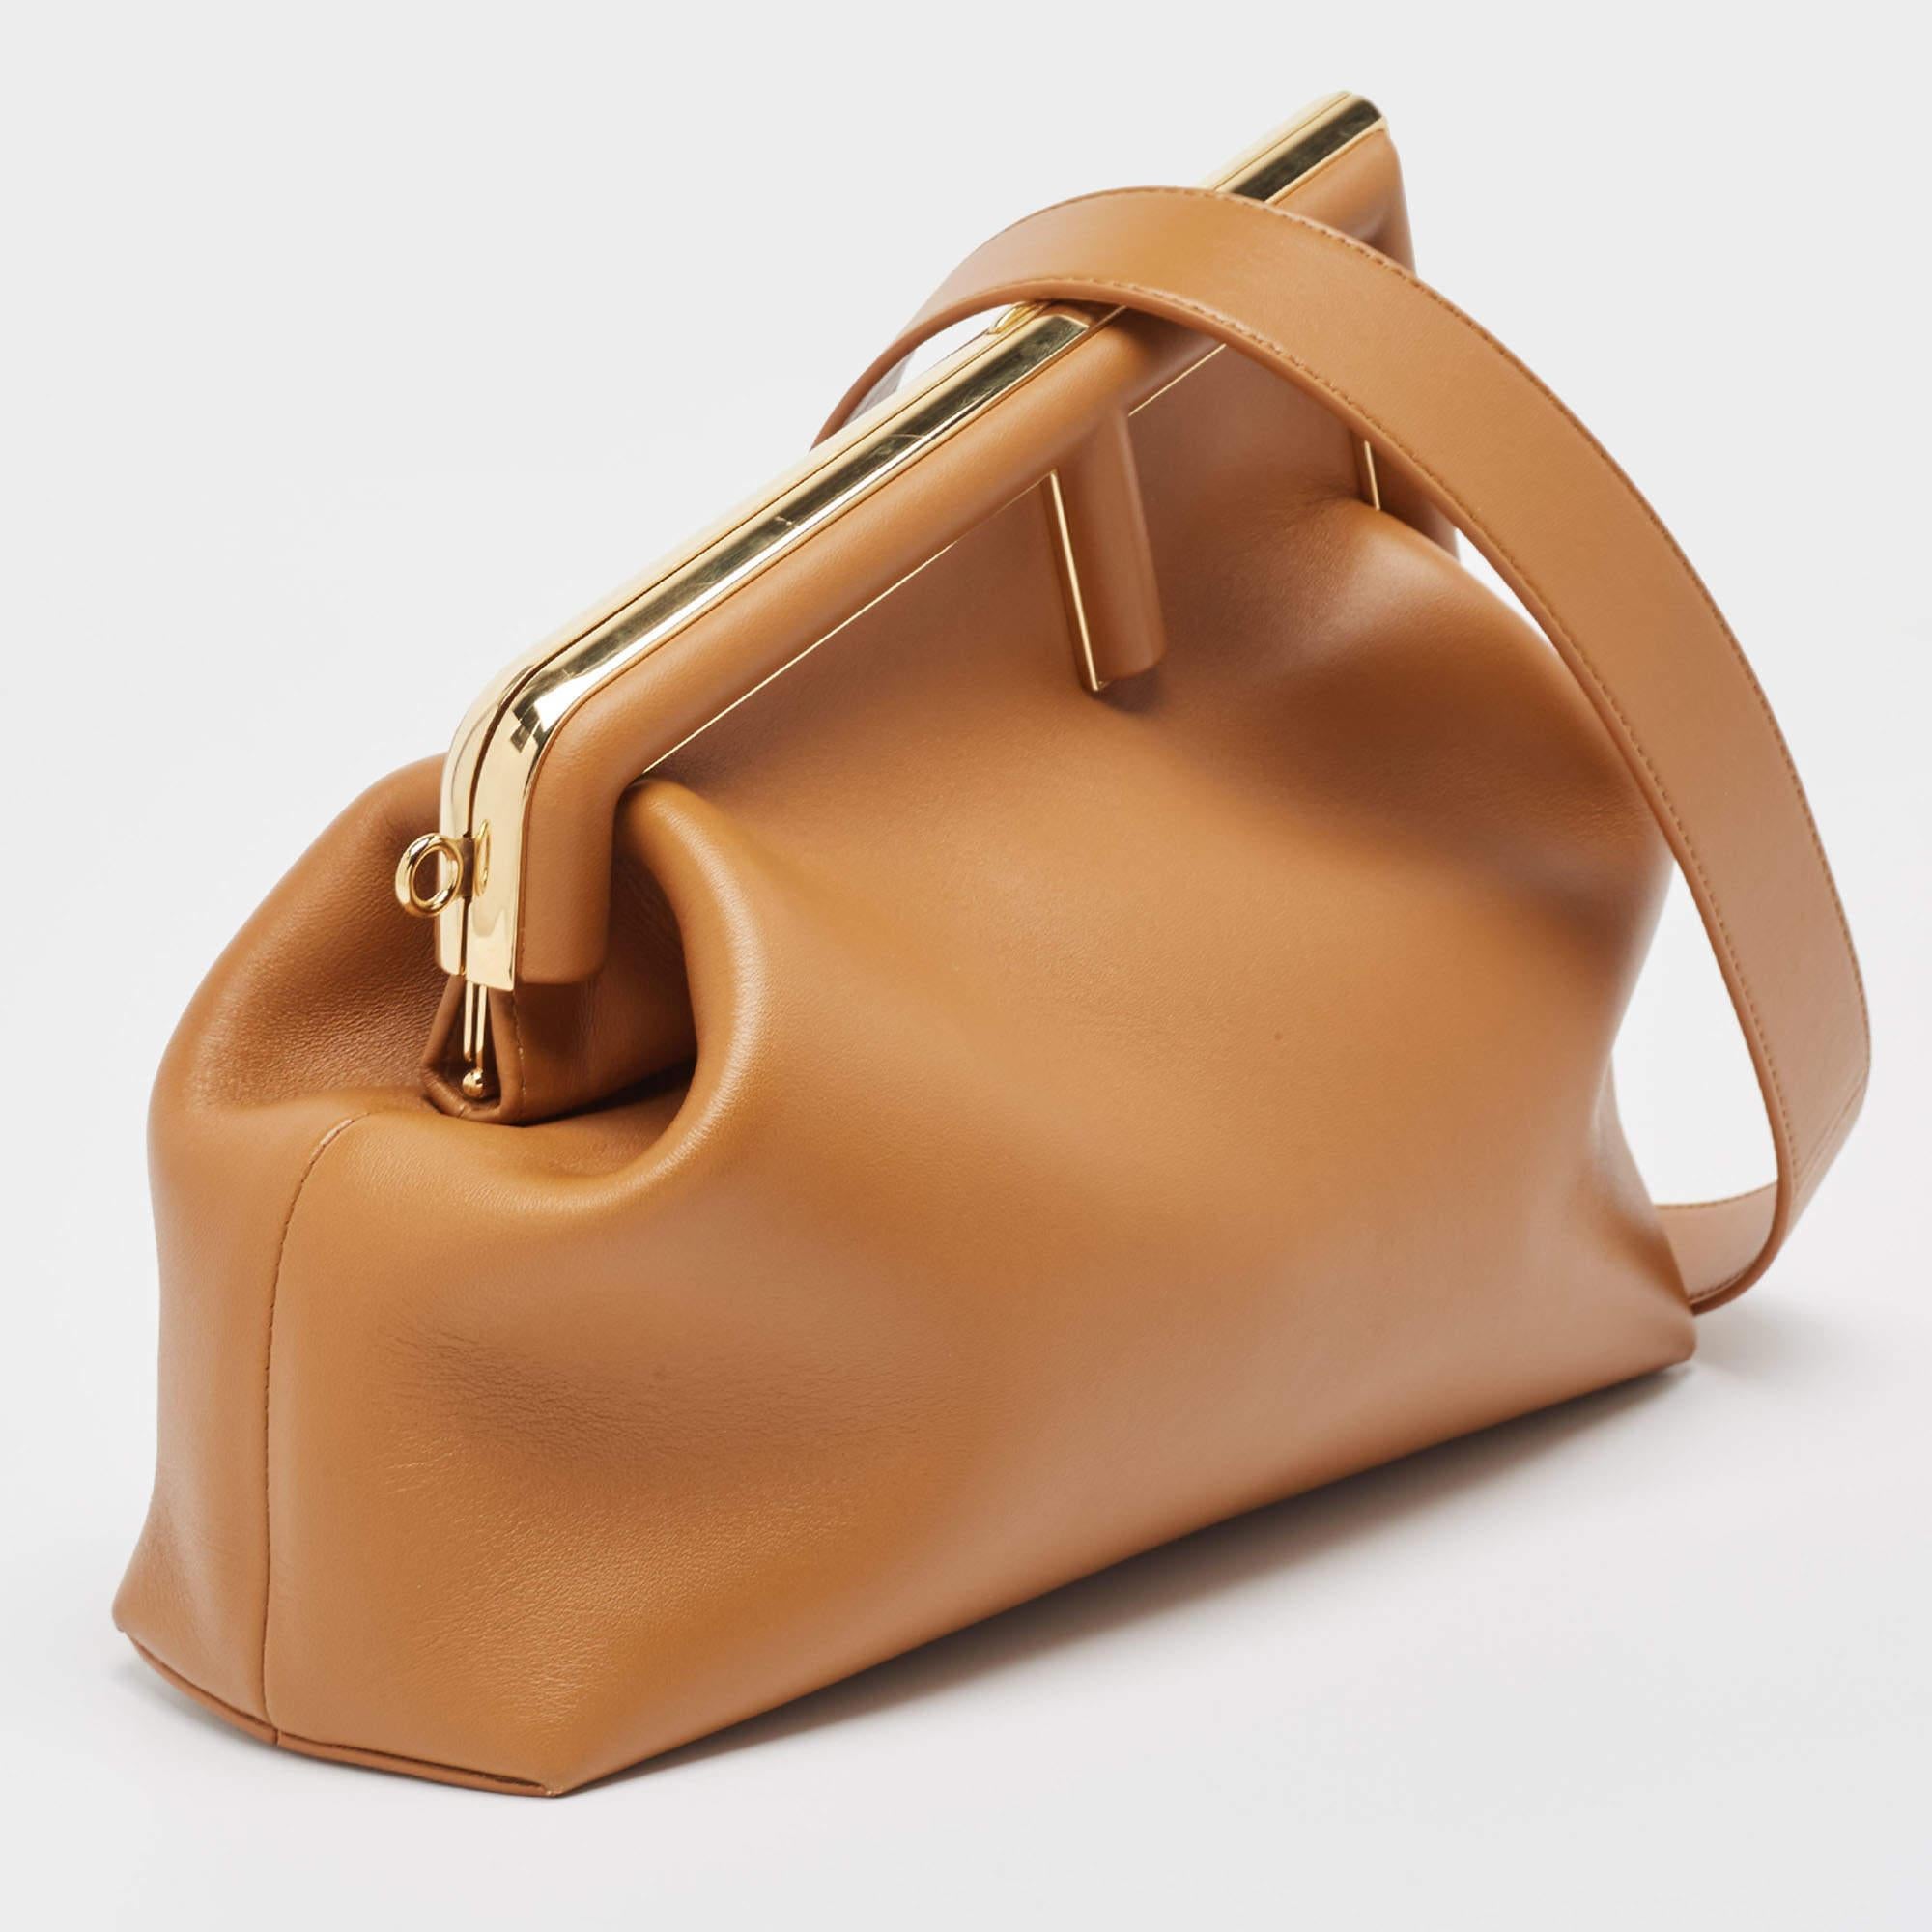 Fendi Brown Leather Medium First Shoulder Bag In Good Condition For Sale In Dubai, Al Qouz 2